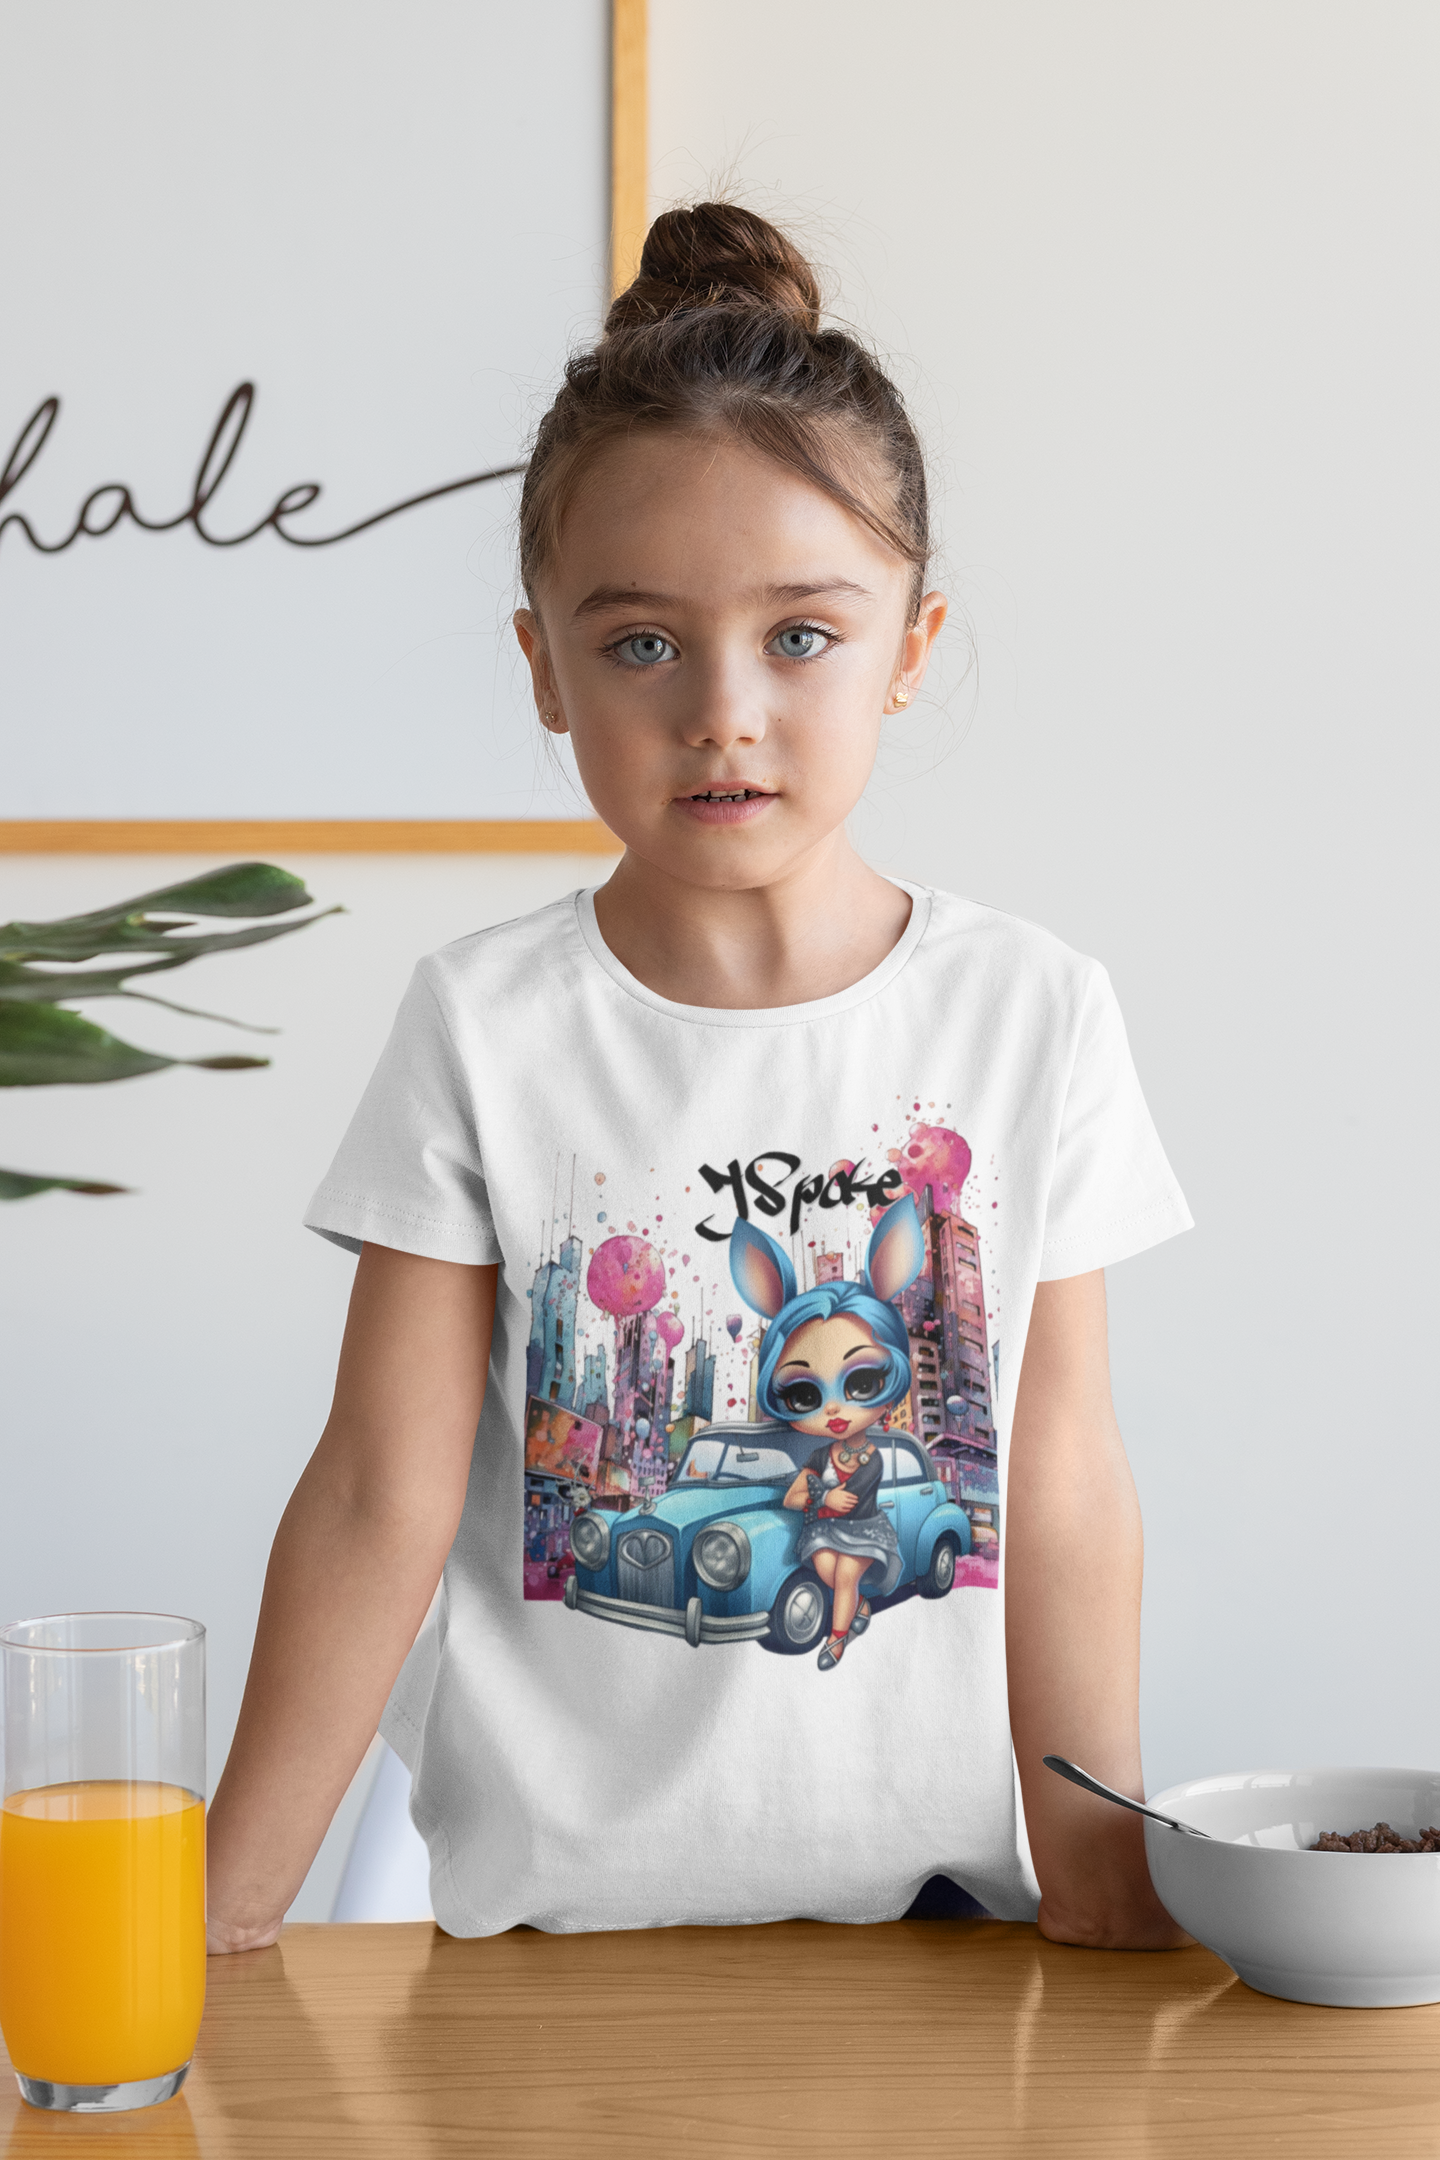 BUNNY CHIC - Kids T-Shirt - JSPOKE